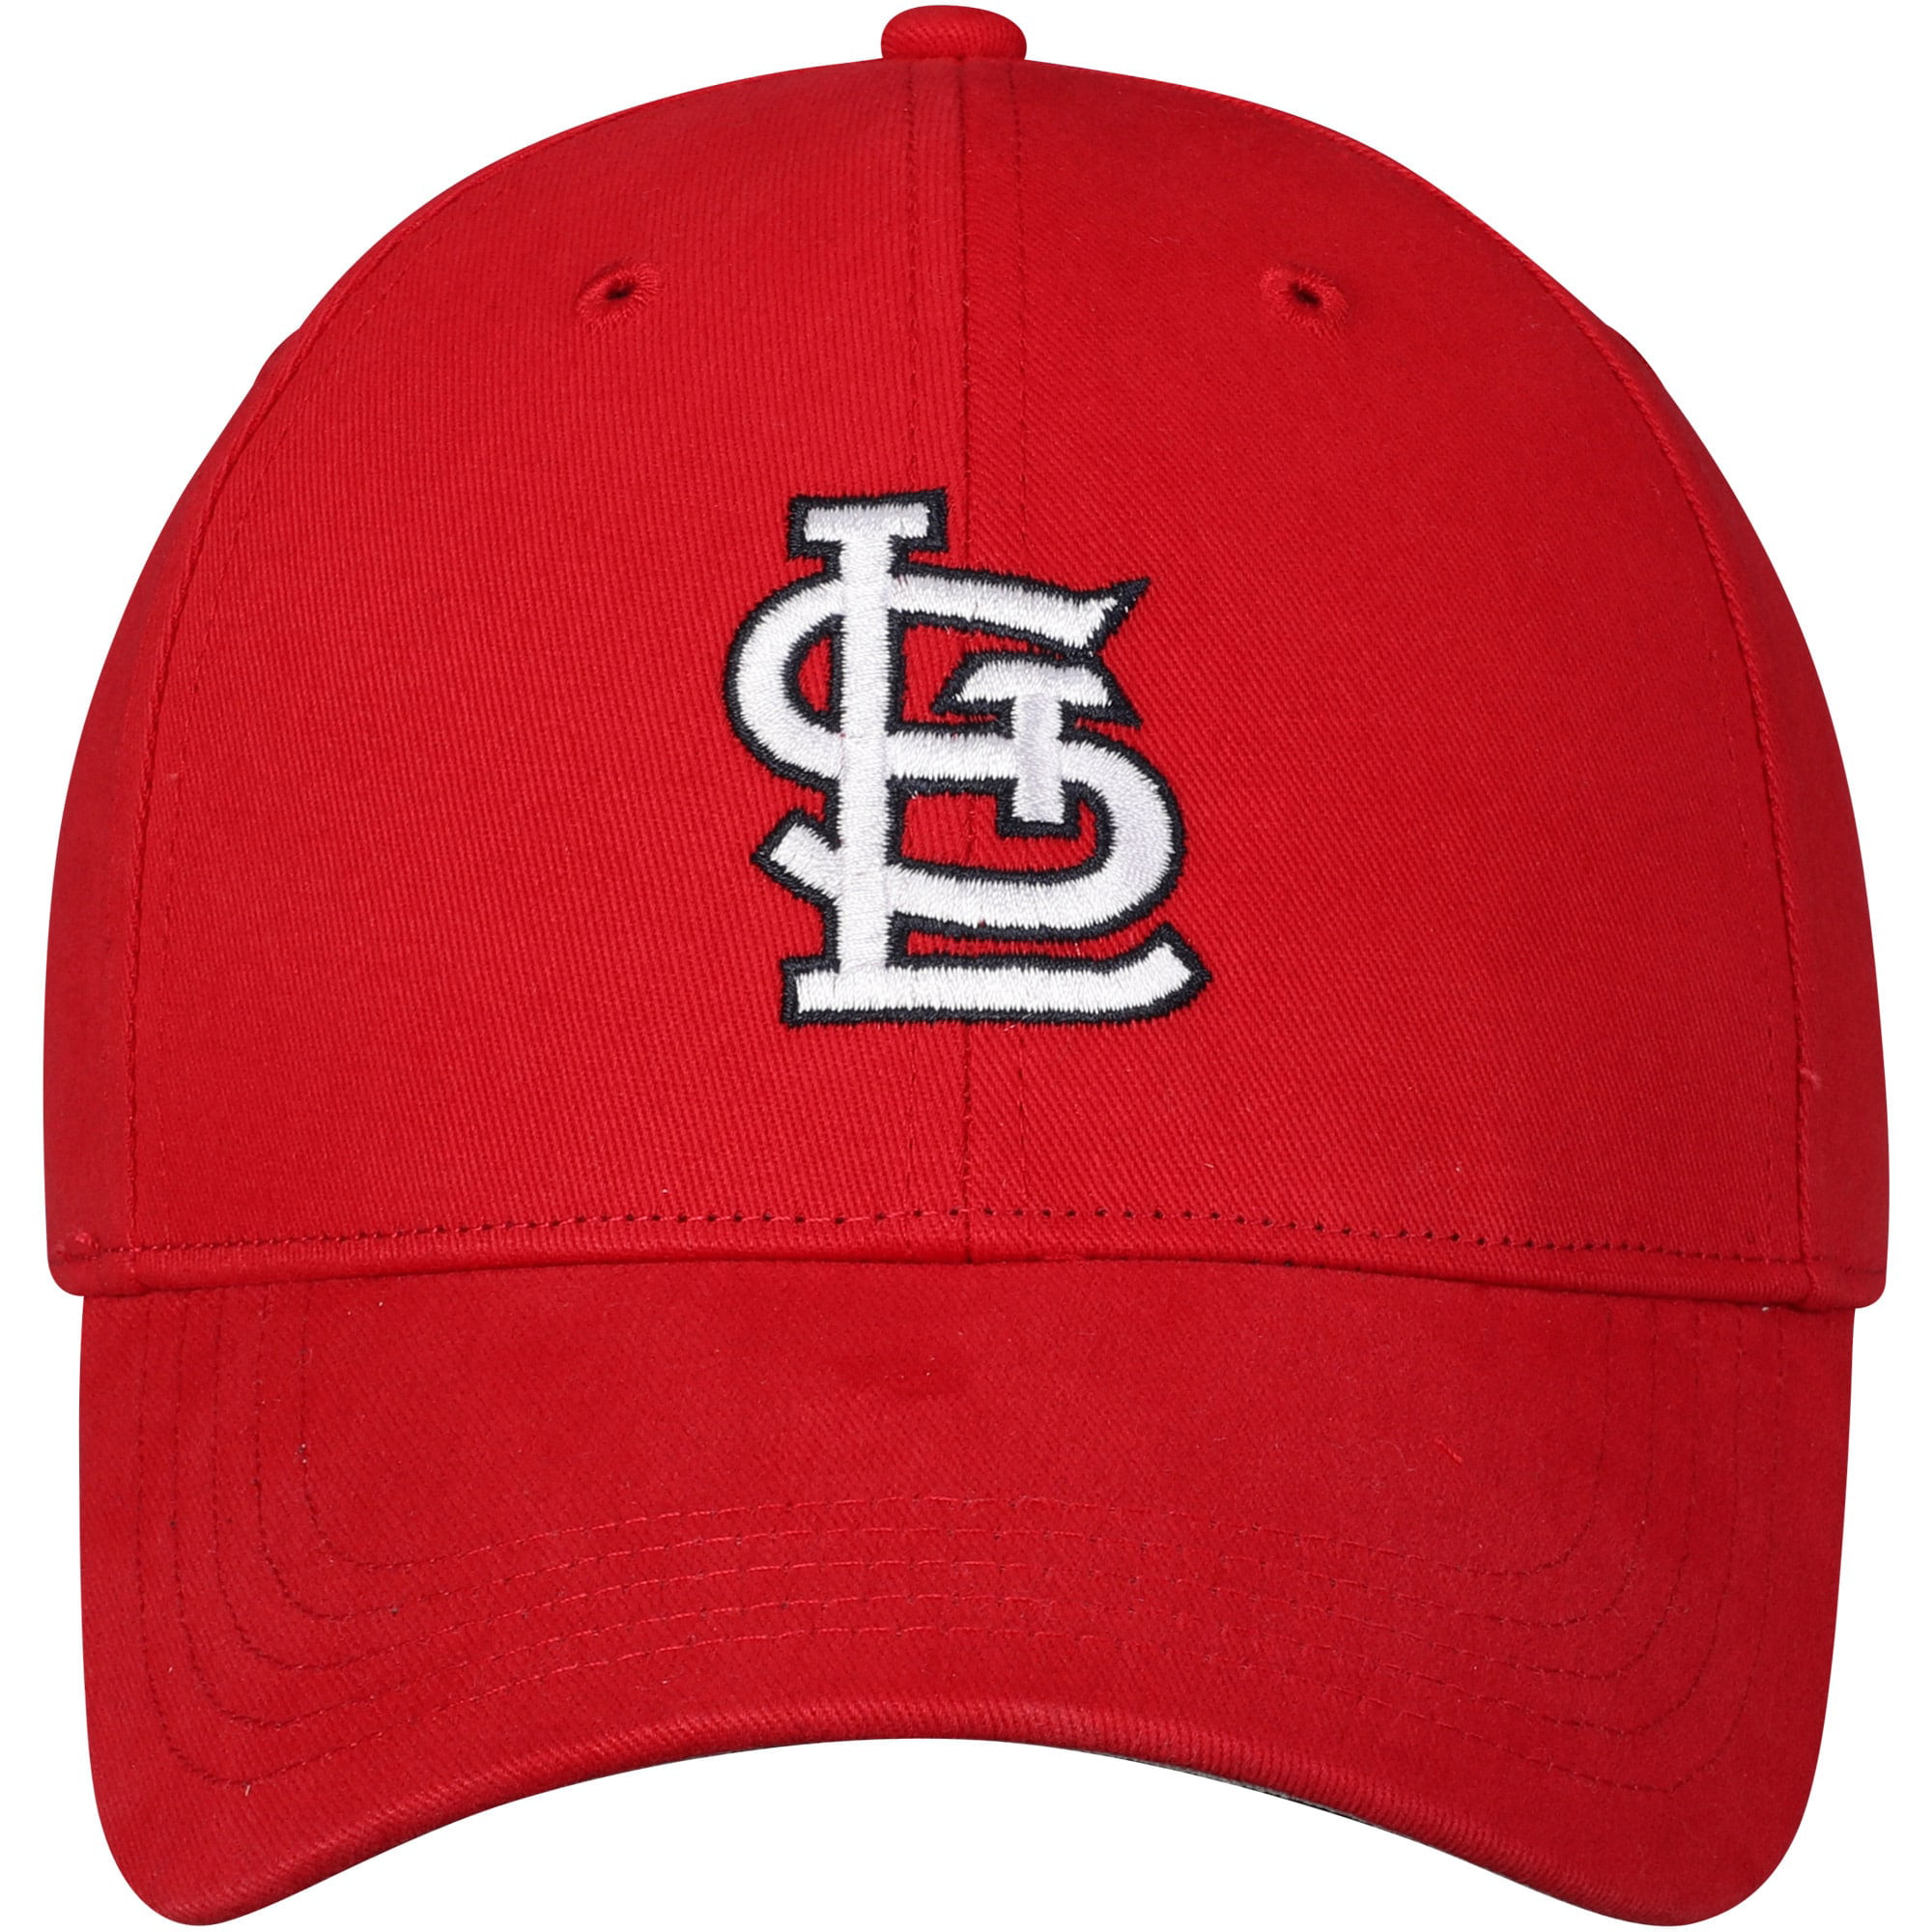 MLB St. Louis Cardinals Boys' Moneymaker Snap Hat